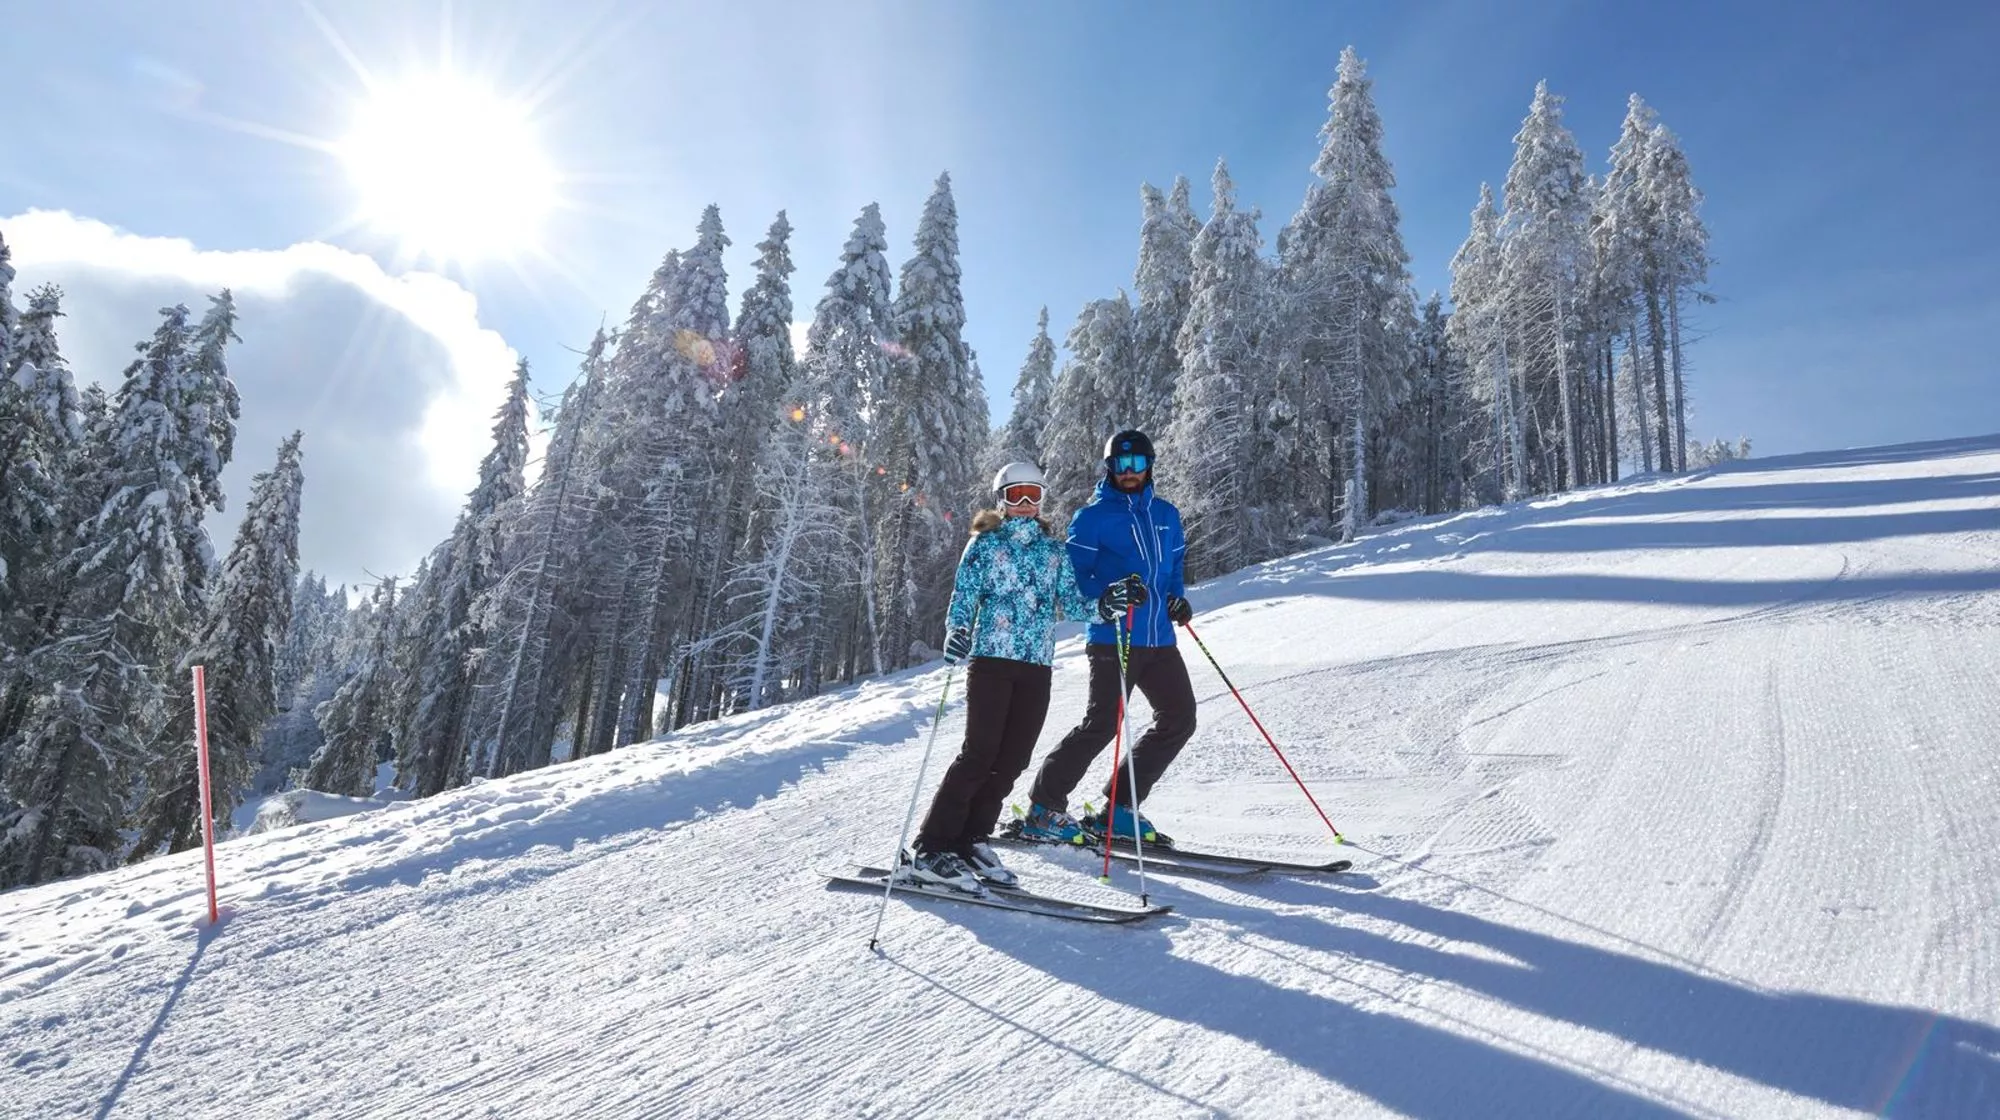 Rogla in Slovenia, Europe | Snowboarding,Skiing - Rated 0.7